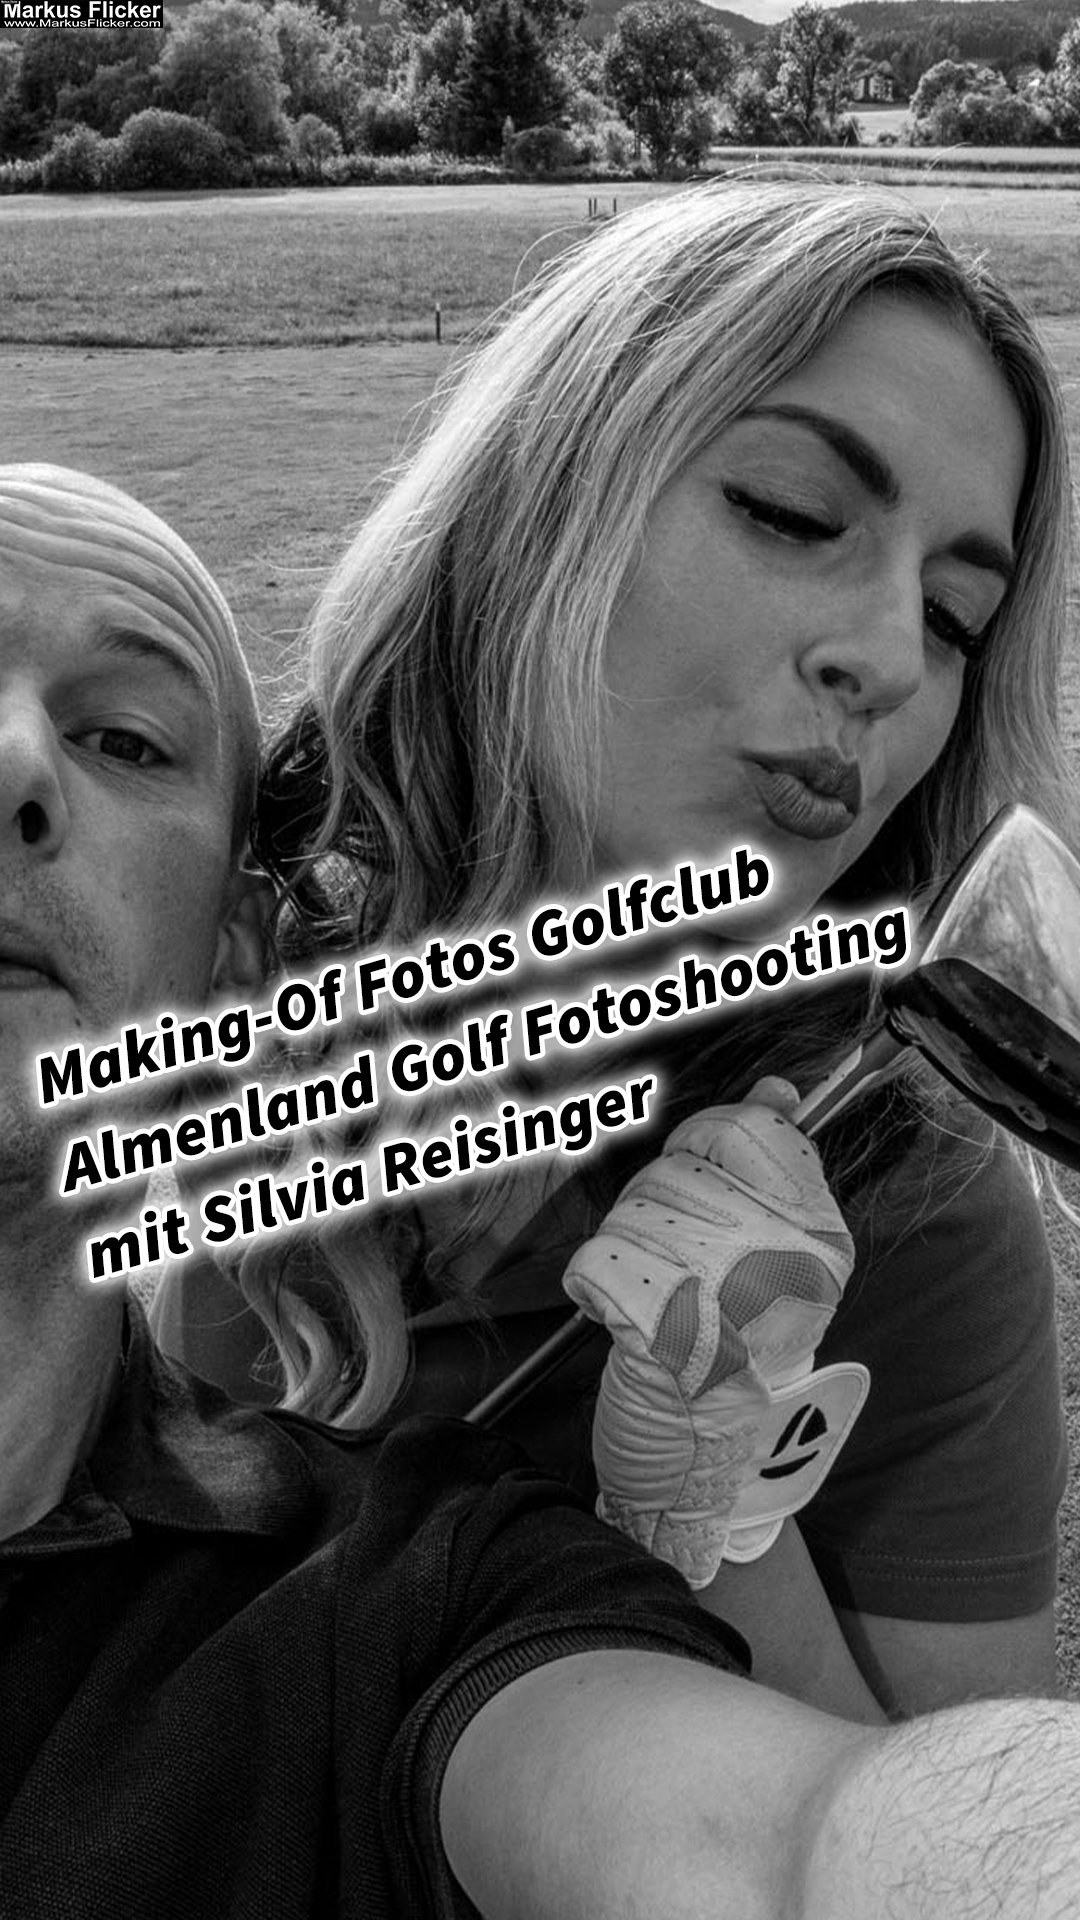 Making-Of Fotos Golfclub Almenland Golf Fotoshooting mit Silvia Reisinger